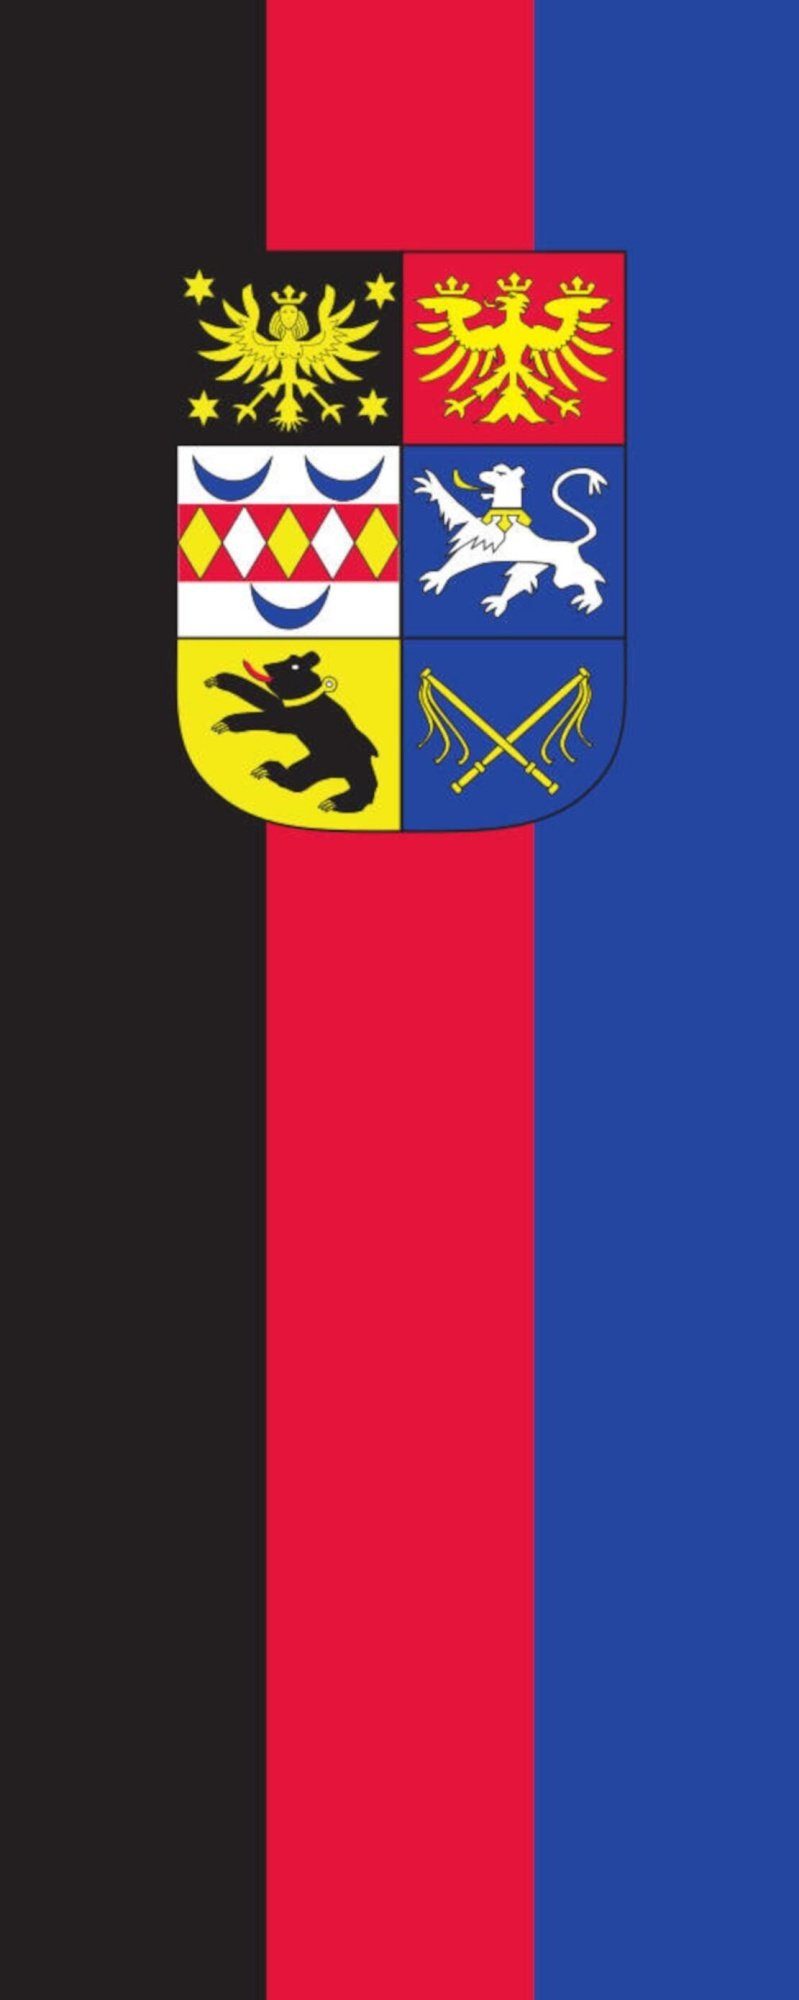 flaggenmeer 120 Hochformat g/m² mit Ostfriesland Wappen Flagge